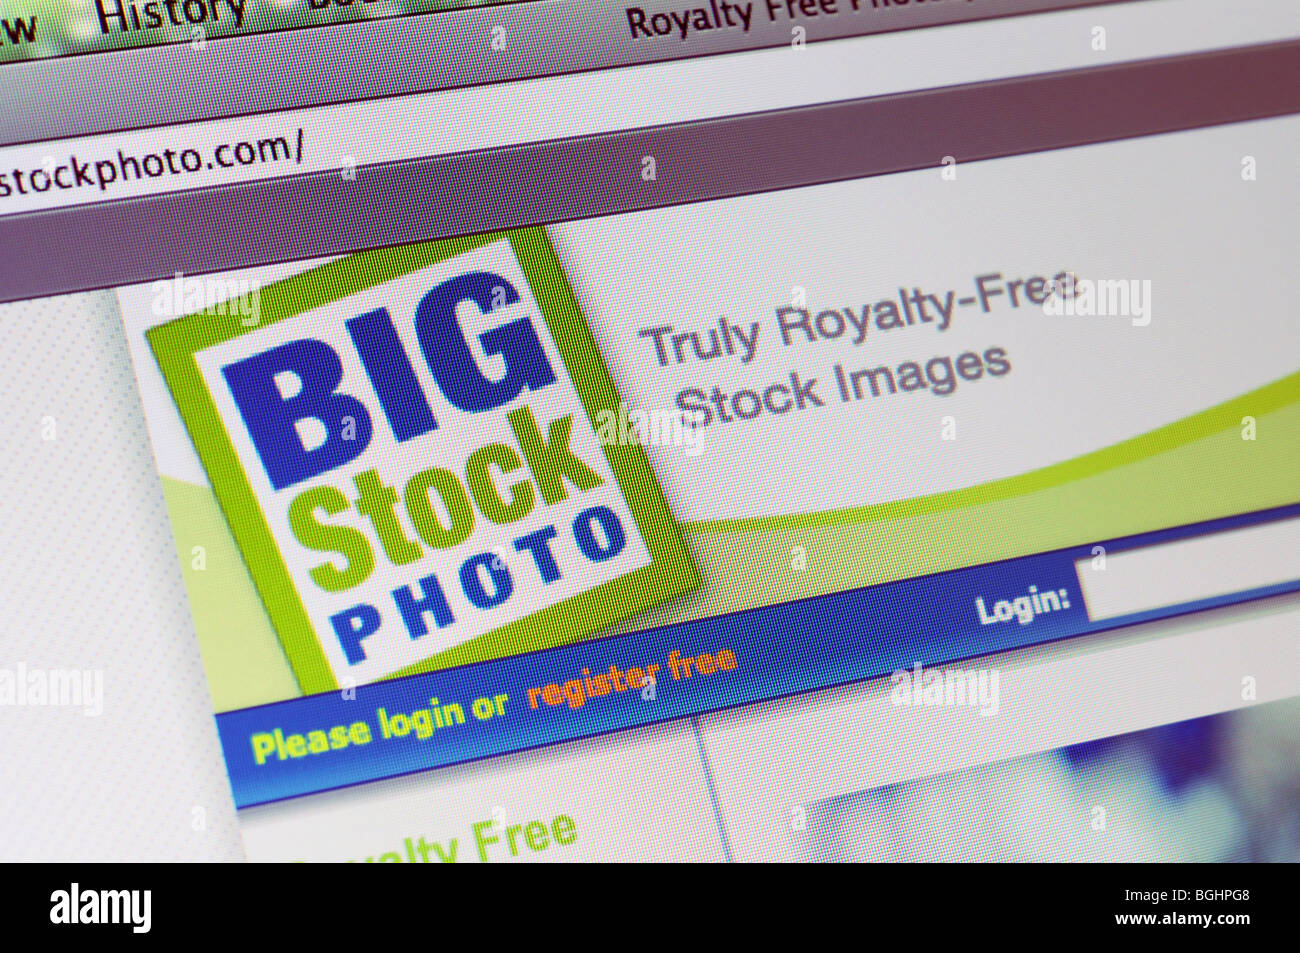 BigStock stock photo agency website Stock Photo